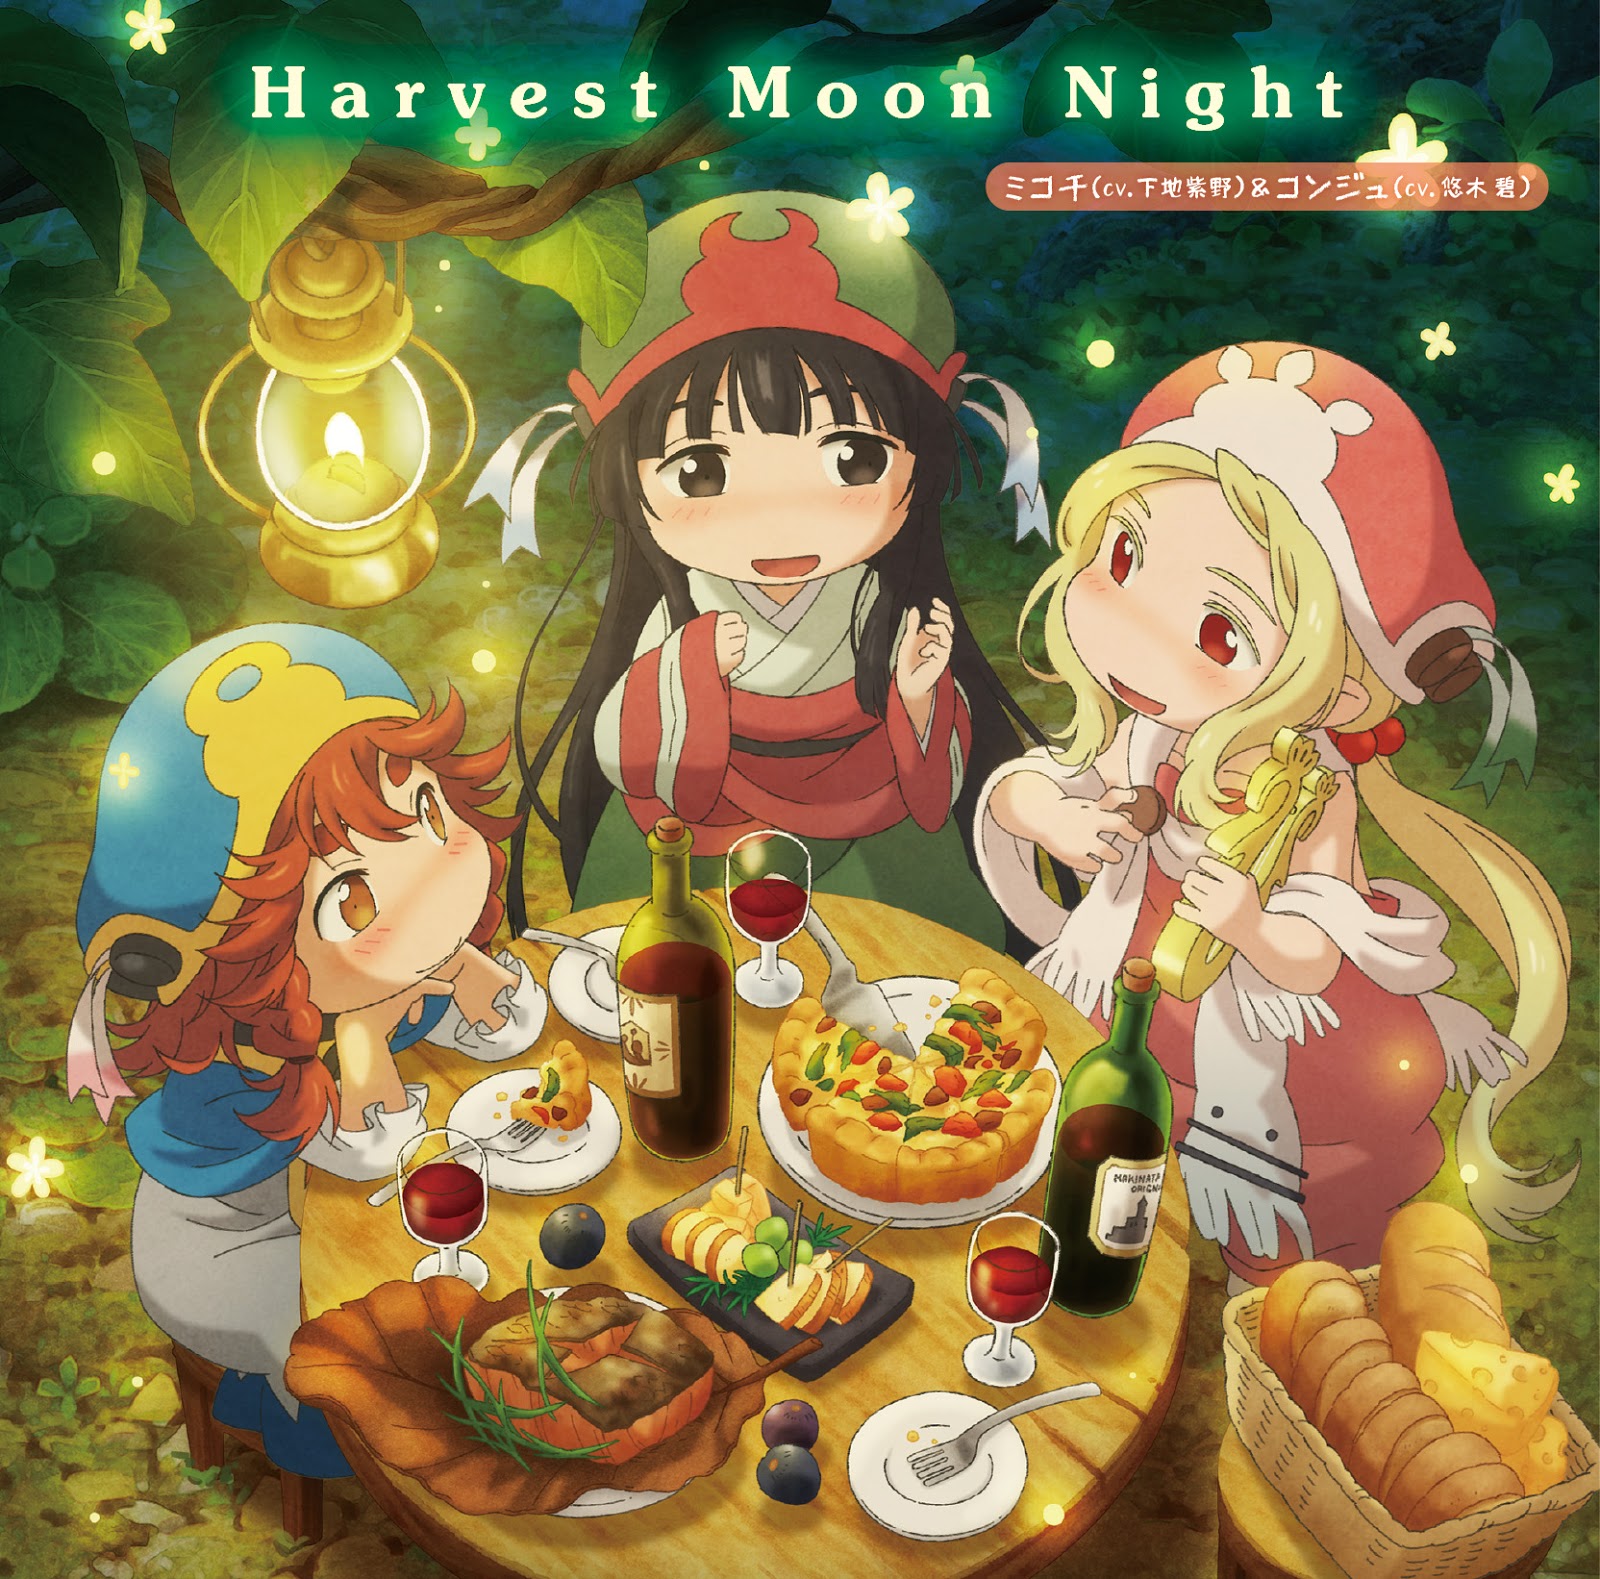 [ED] [SONG] クメイとミコチ (Hakumei to Mikochi) - Harvest Moon Night [Ending] [07.03.2018].Mp3